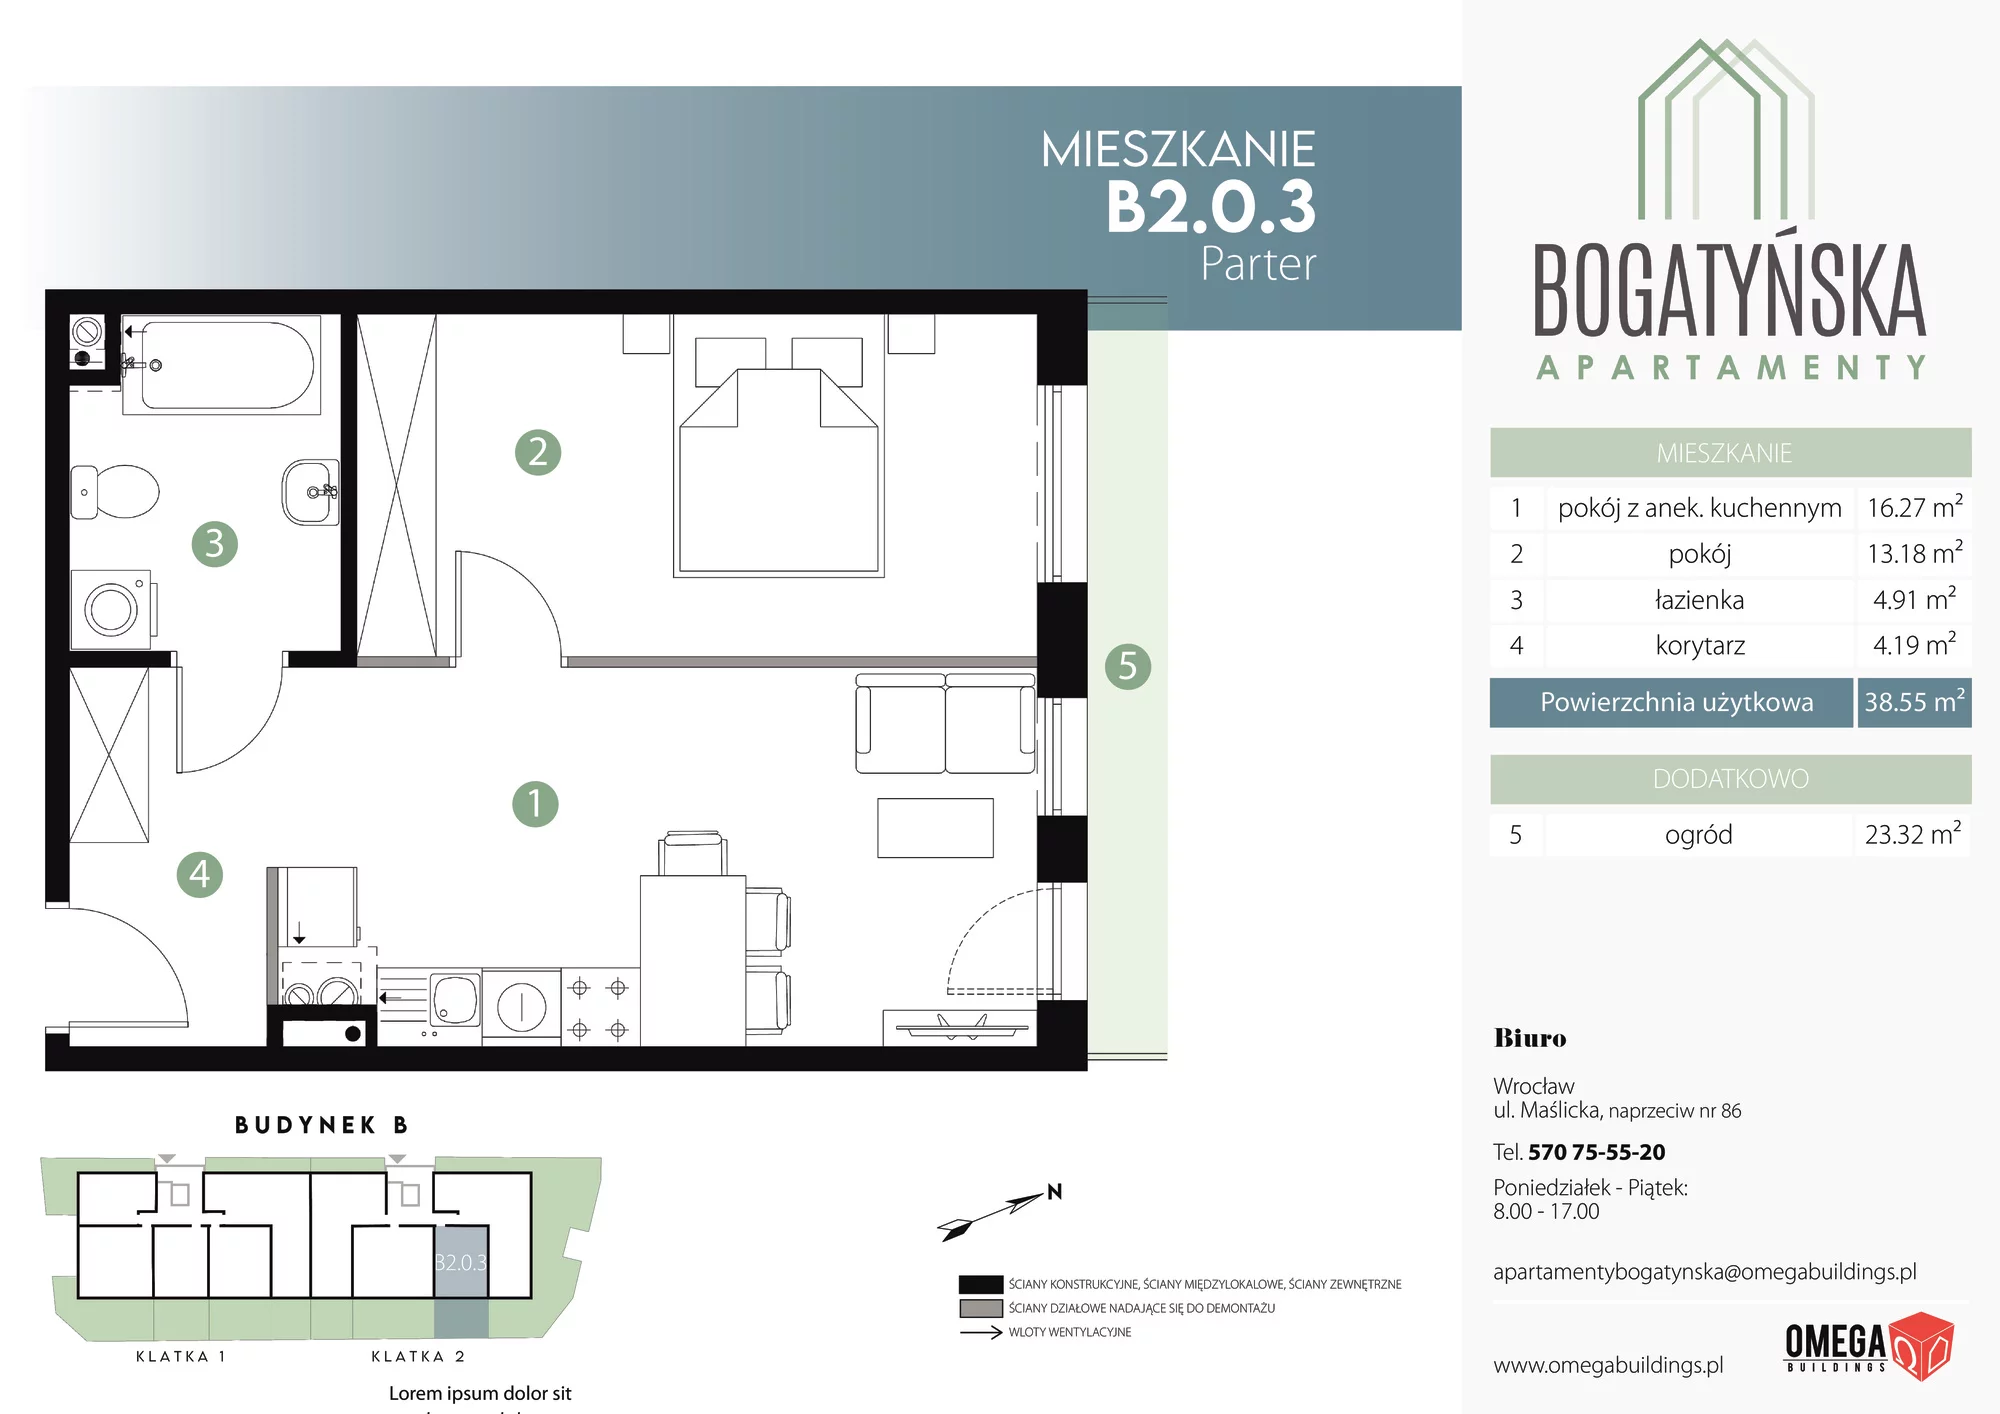 Apartament 38,55 m², parter, oferta nr B2.0.3, Bogatyńska Apartamenty, Wrocław, Maślice, Fabryczna, ul. Bogatyńska